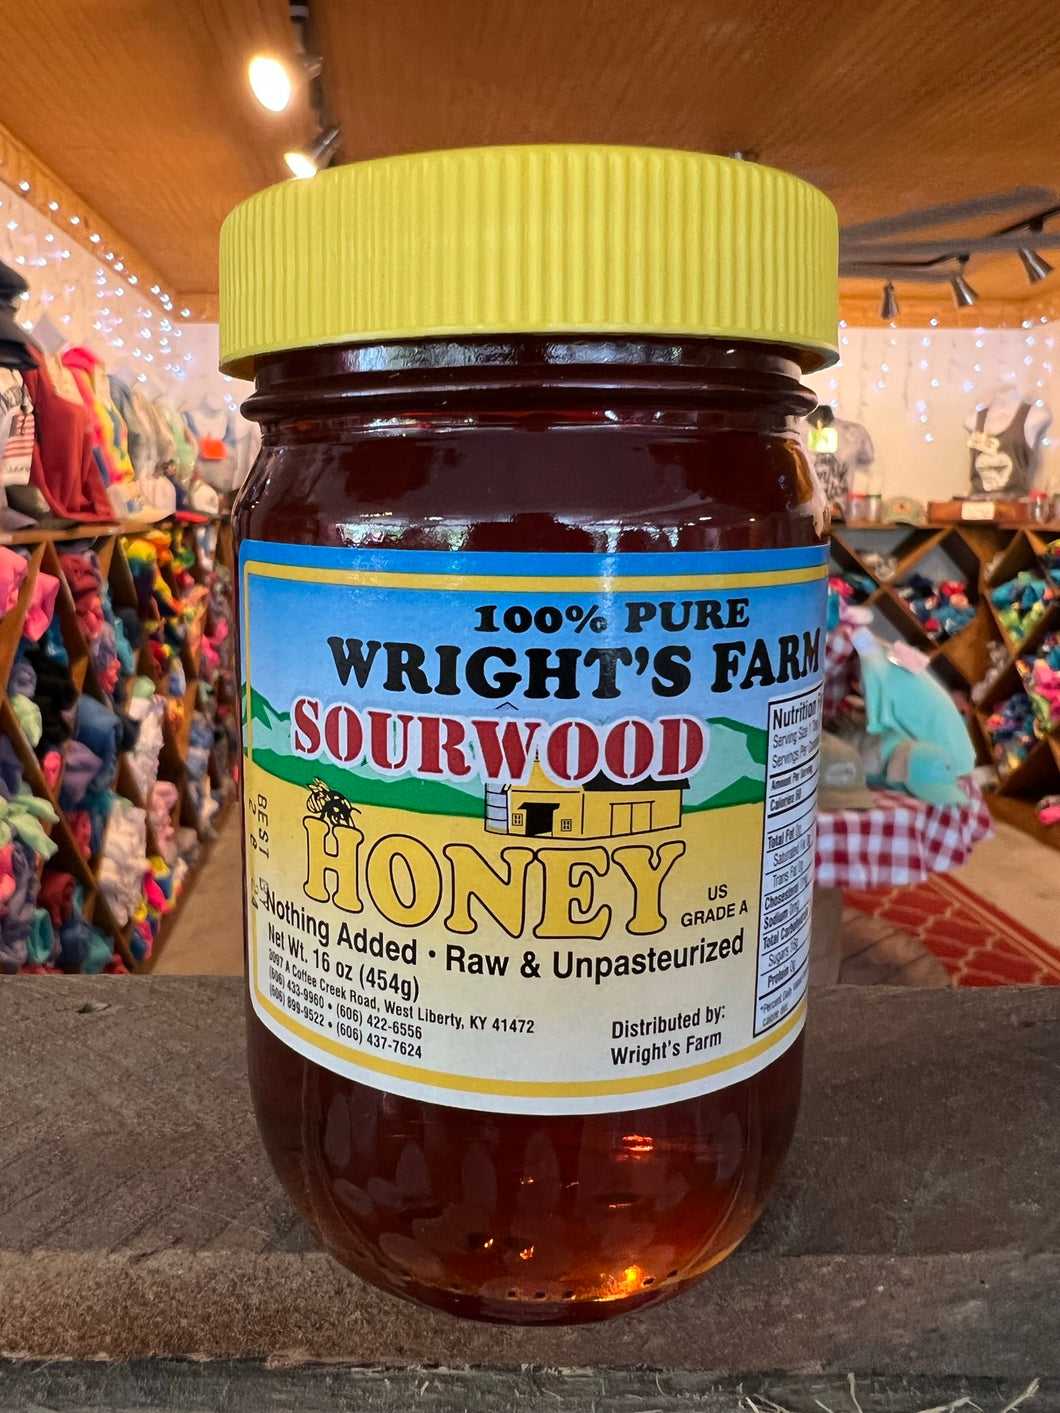 Wrights Farms Sourwood honey